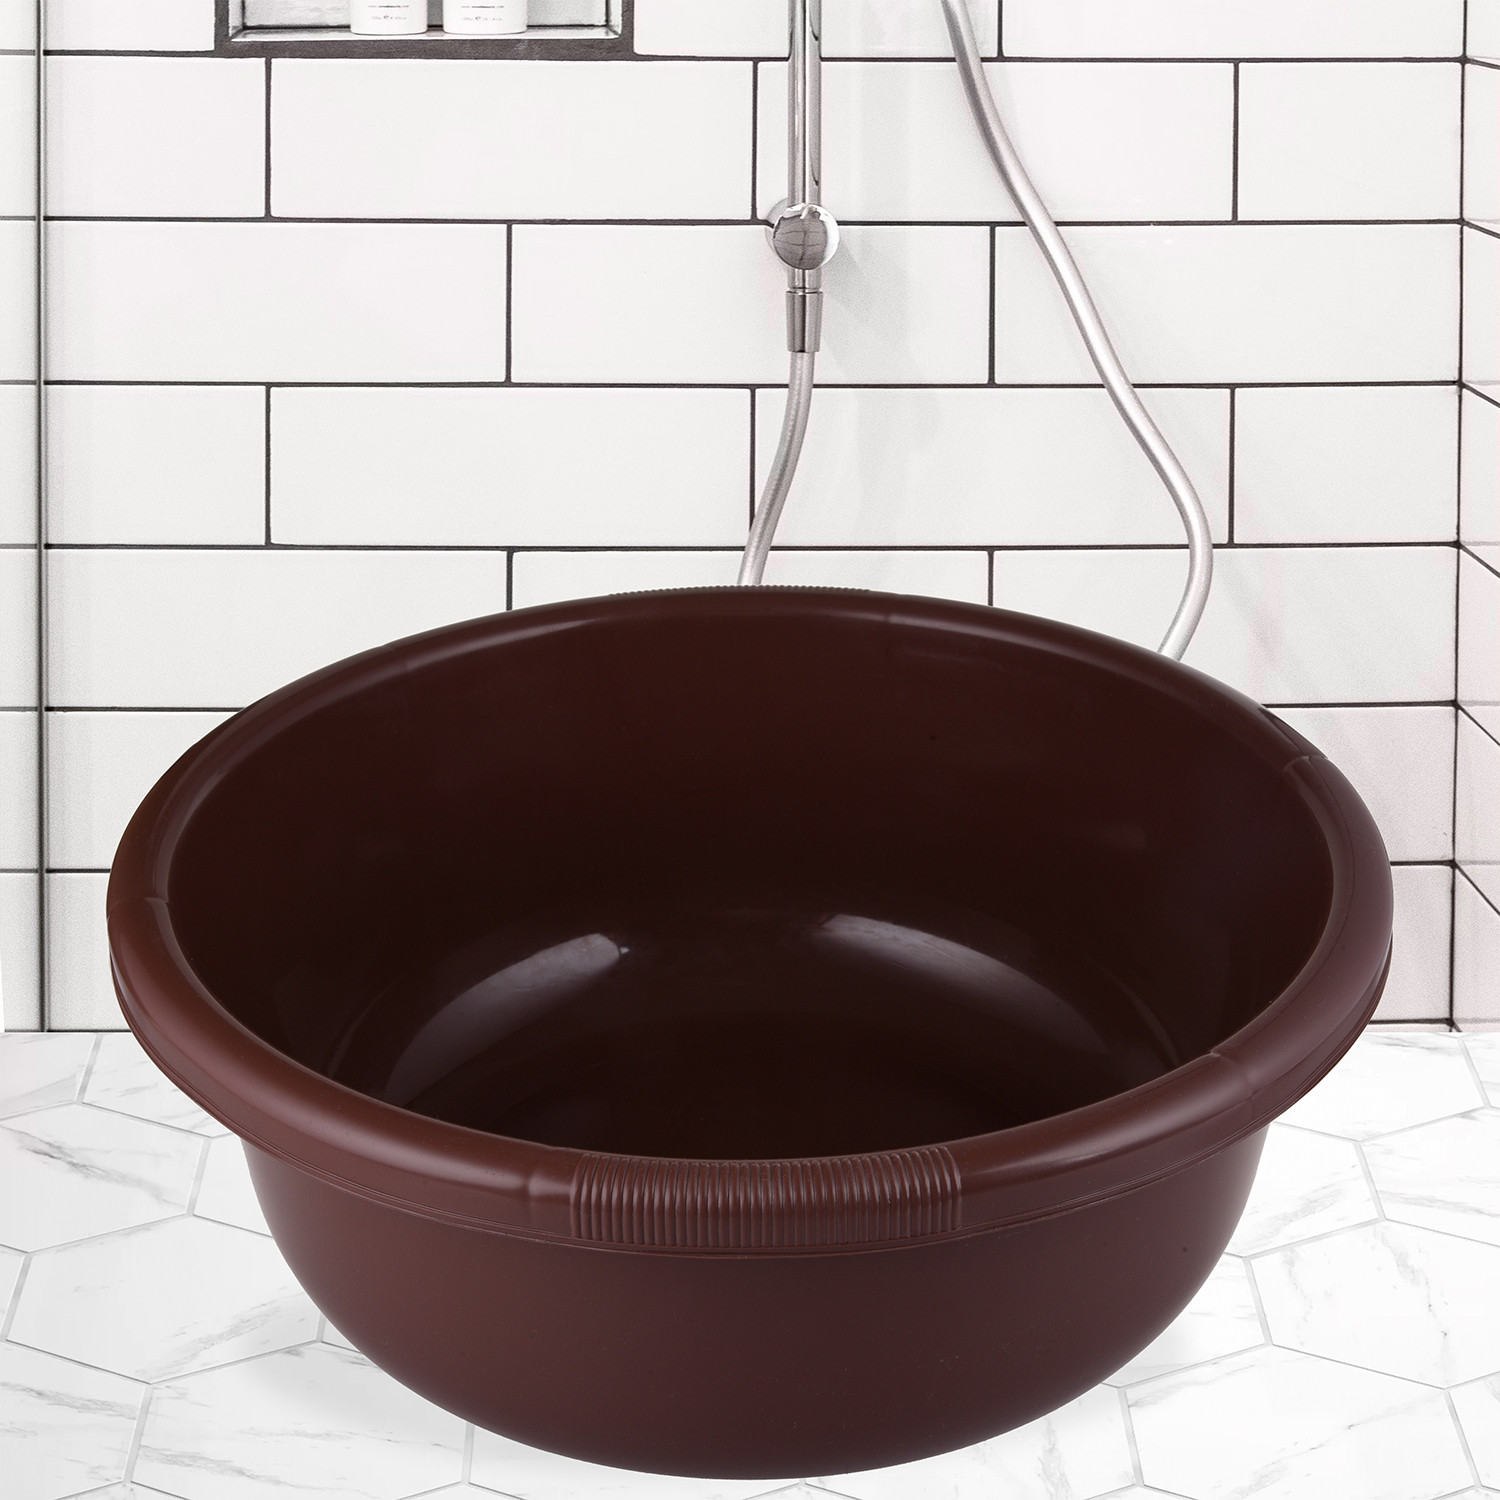 Kuber Industries Bath Tub|Versatile Plastic Utility Gaint Tub|Durable Deep Tub for Baby Bathing|Washing Clothes|Feeding Pan|26 Liter|Pack of 2 (Brown & Cream)